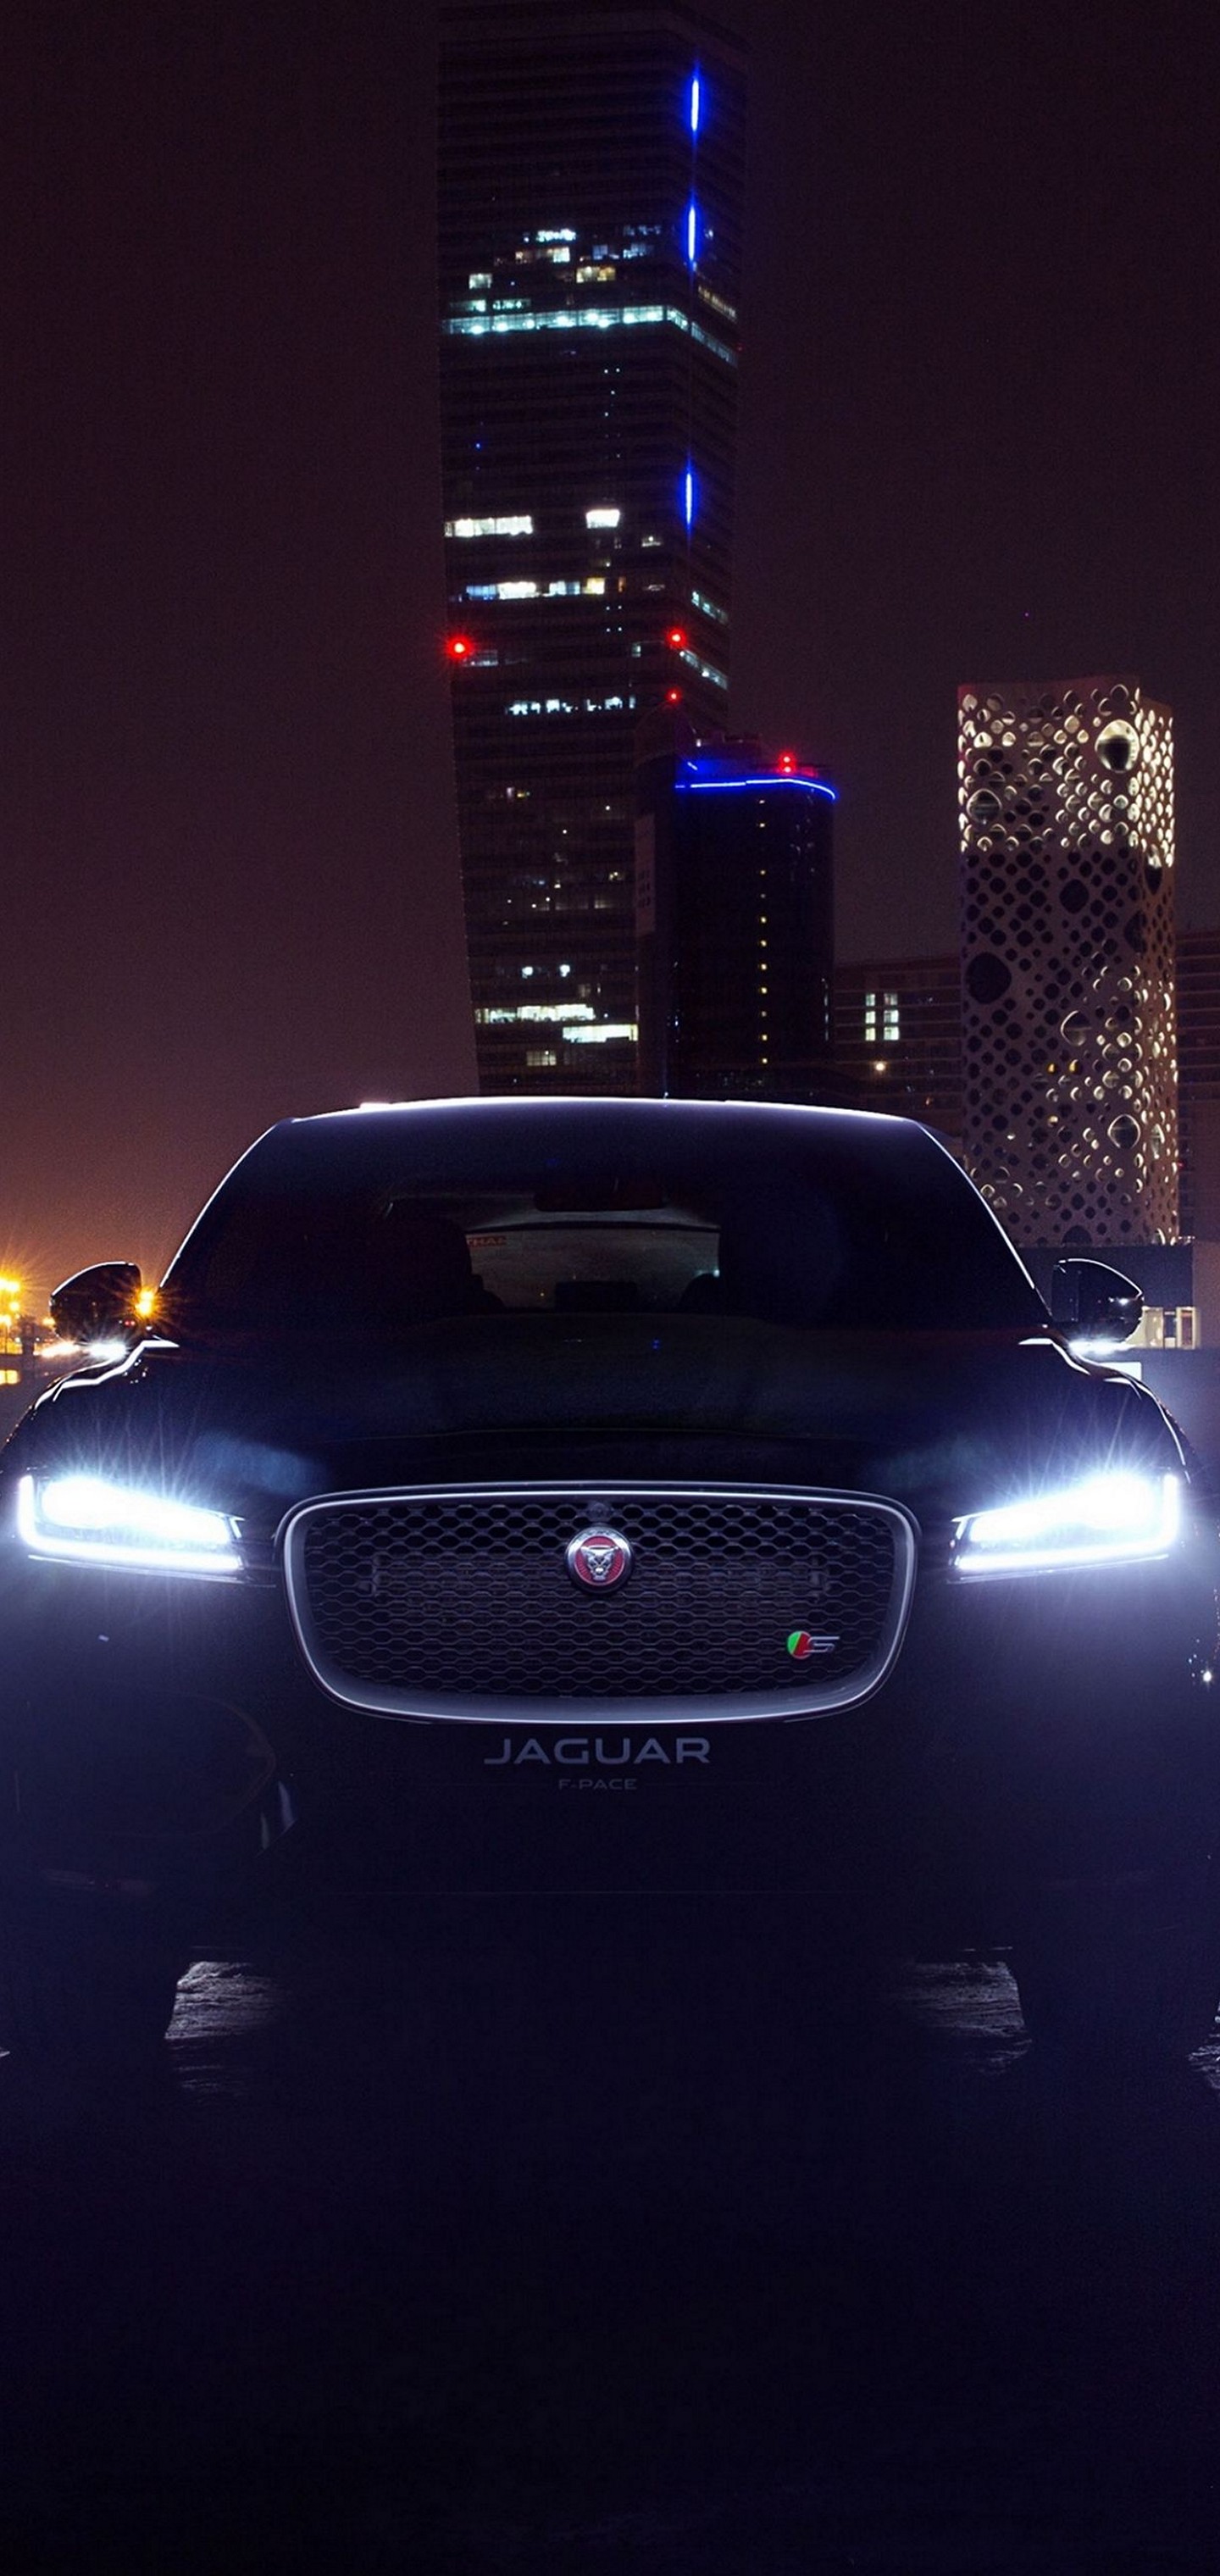 Jaguar Car Images Wallpaper